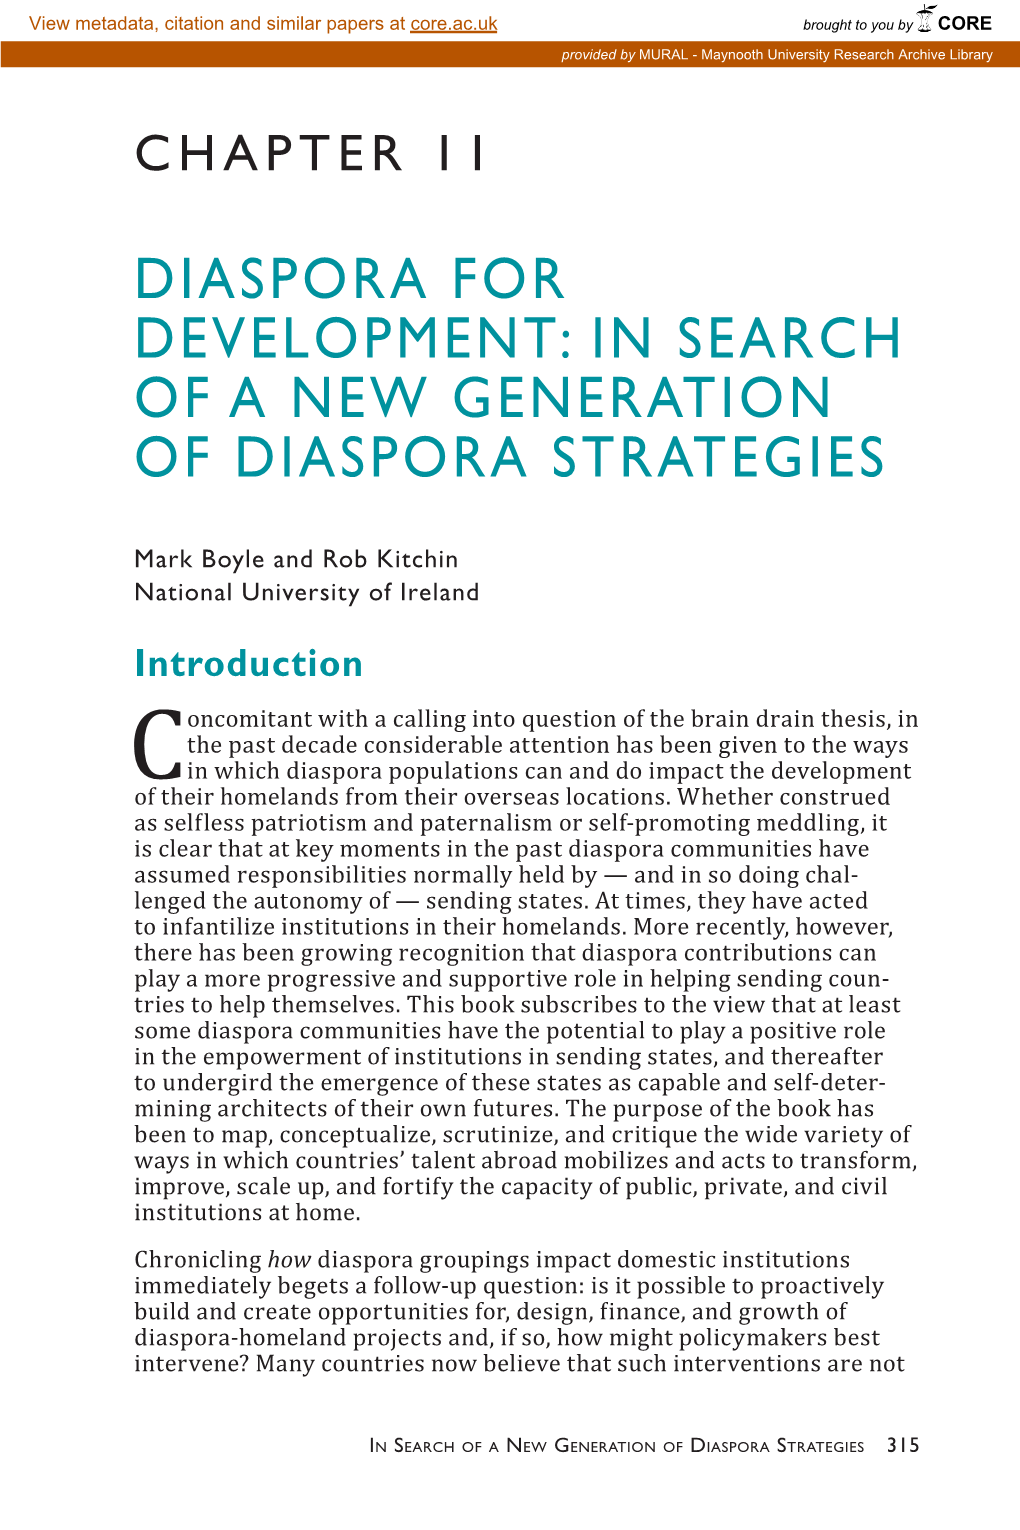 Diaspora for Development: in Search of a New Generation of Diaspora Strategies